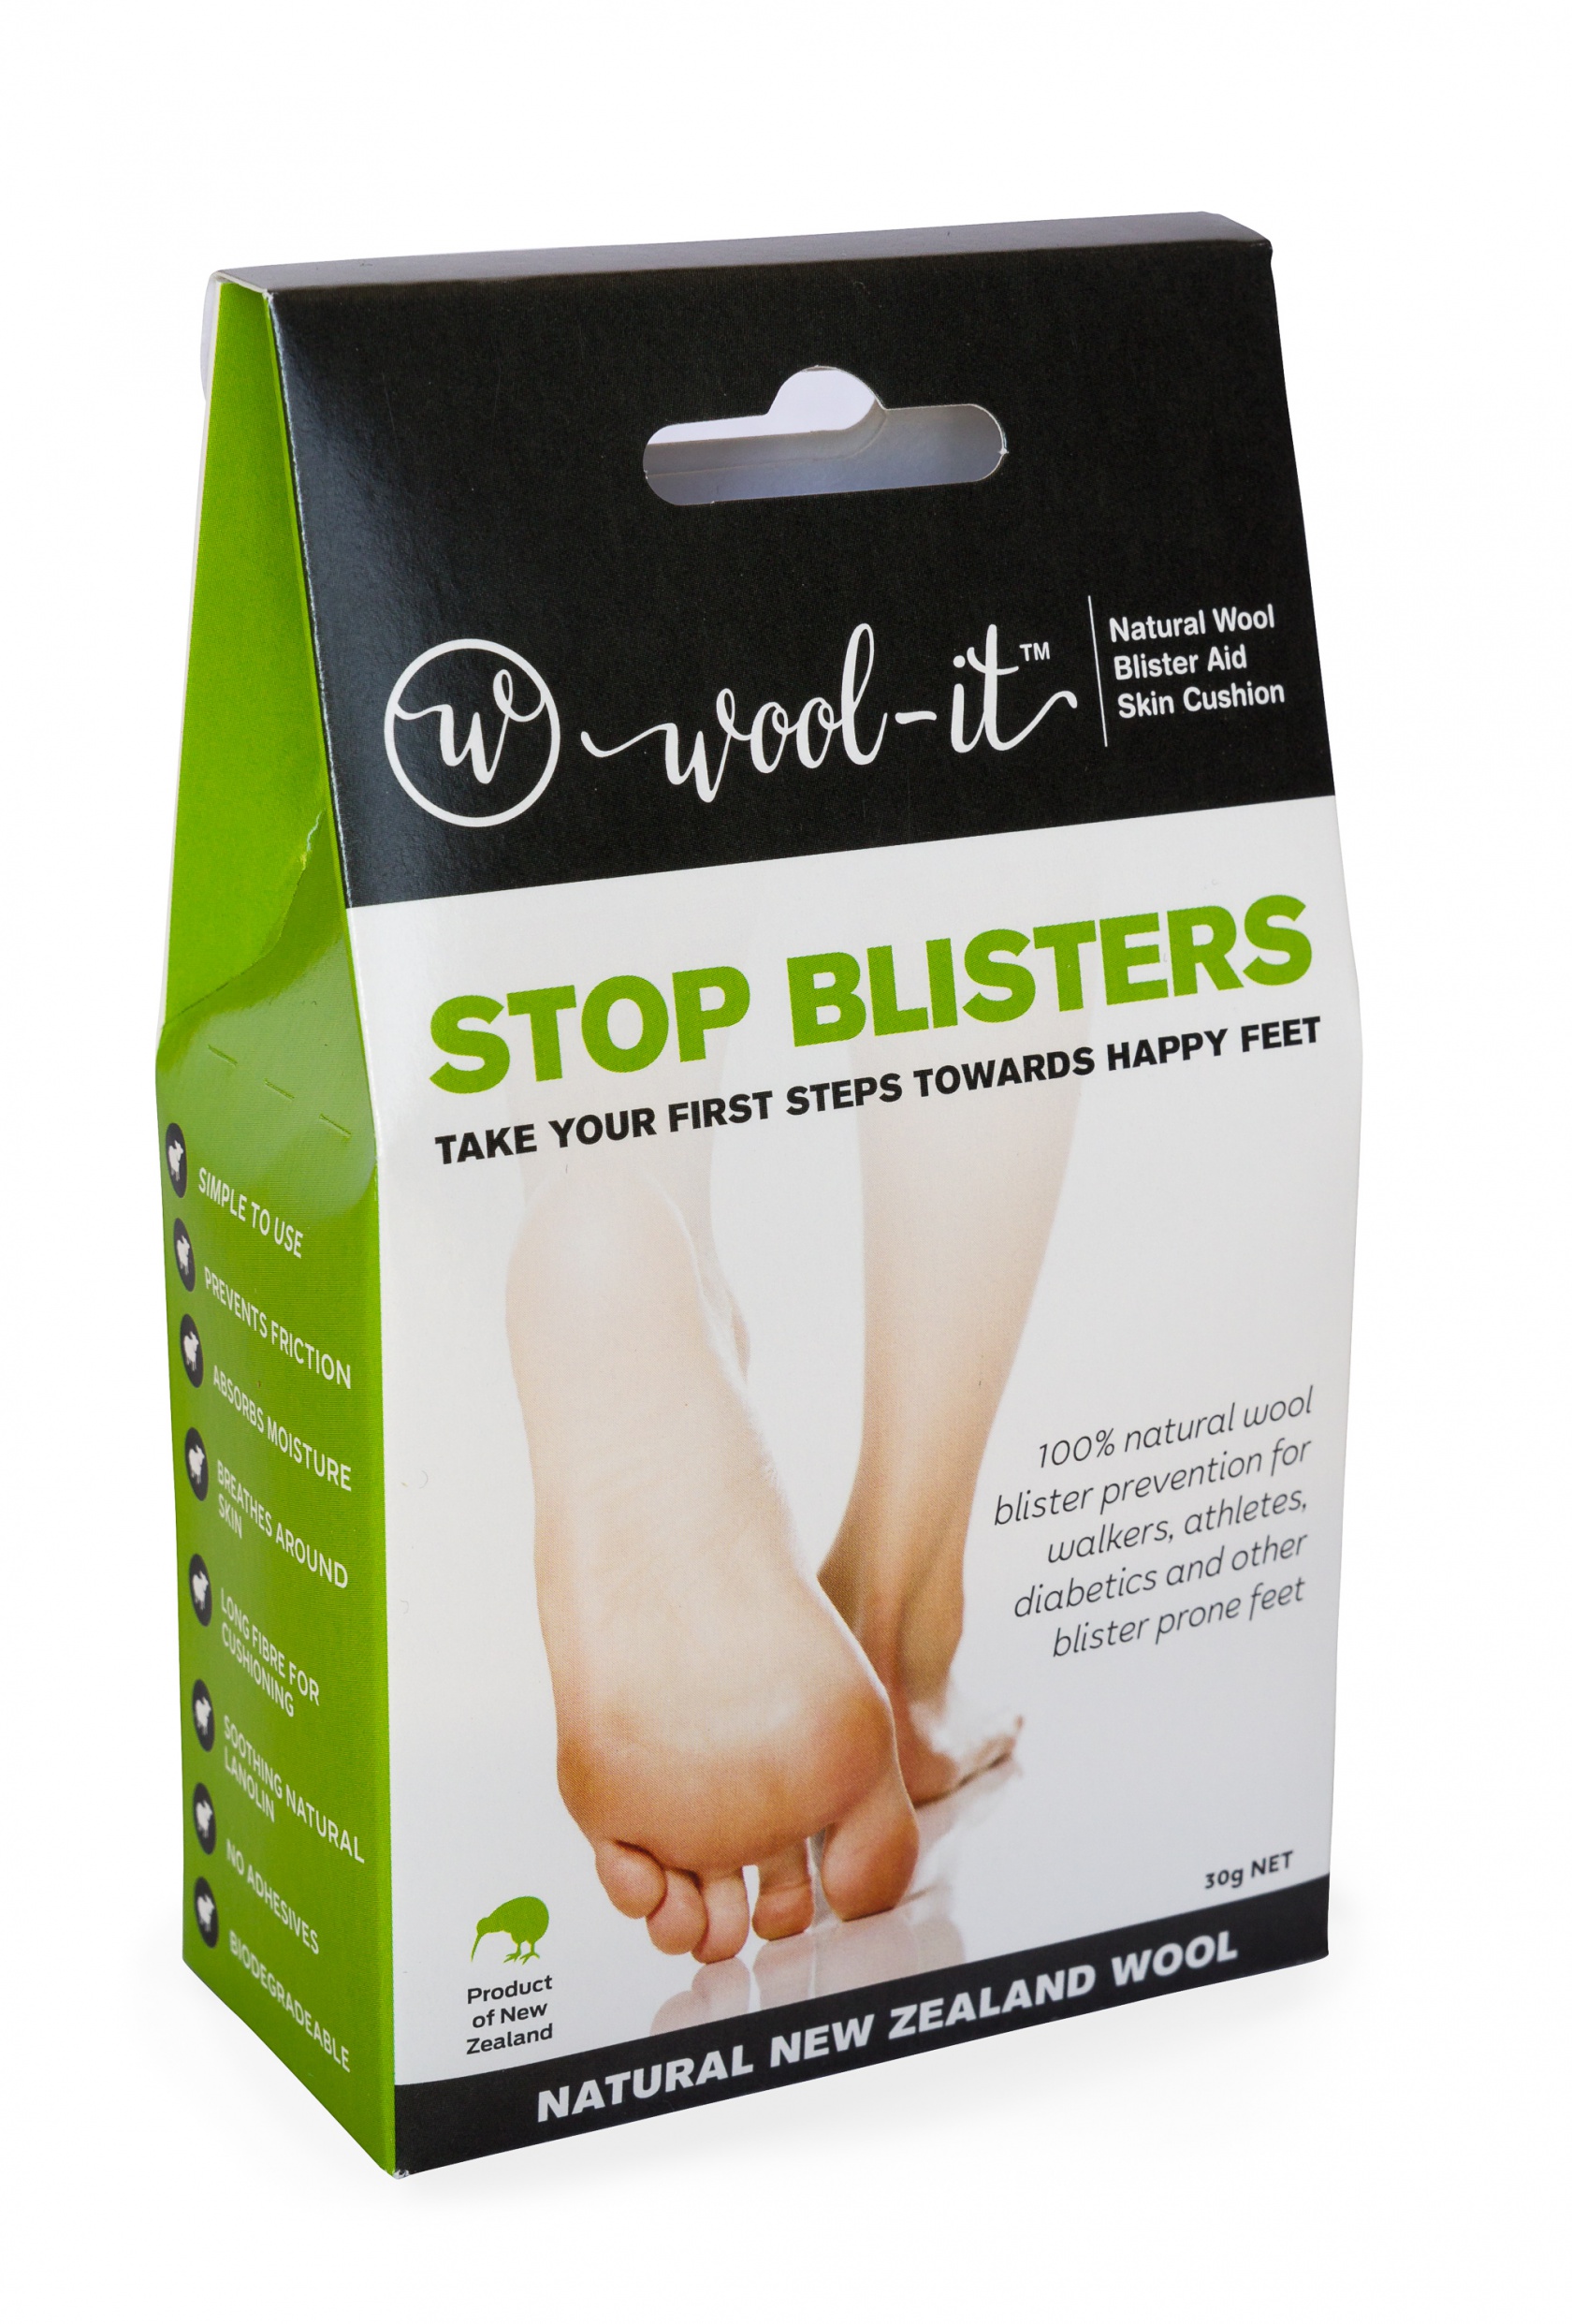 Wool-it Blister Prevention 30g Box